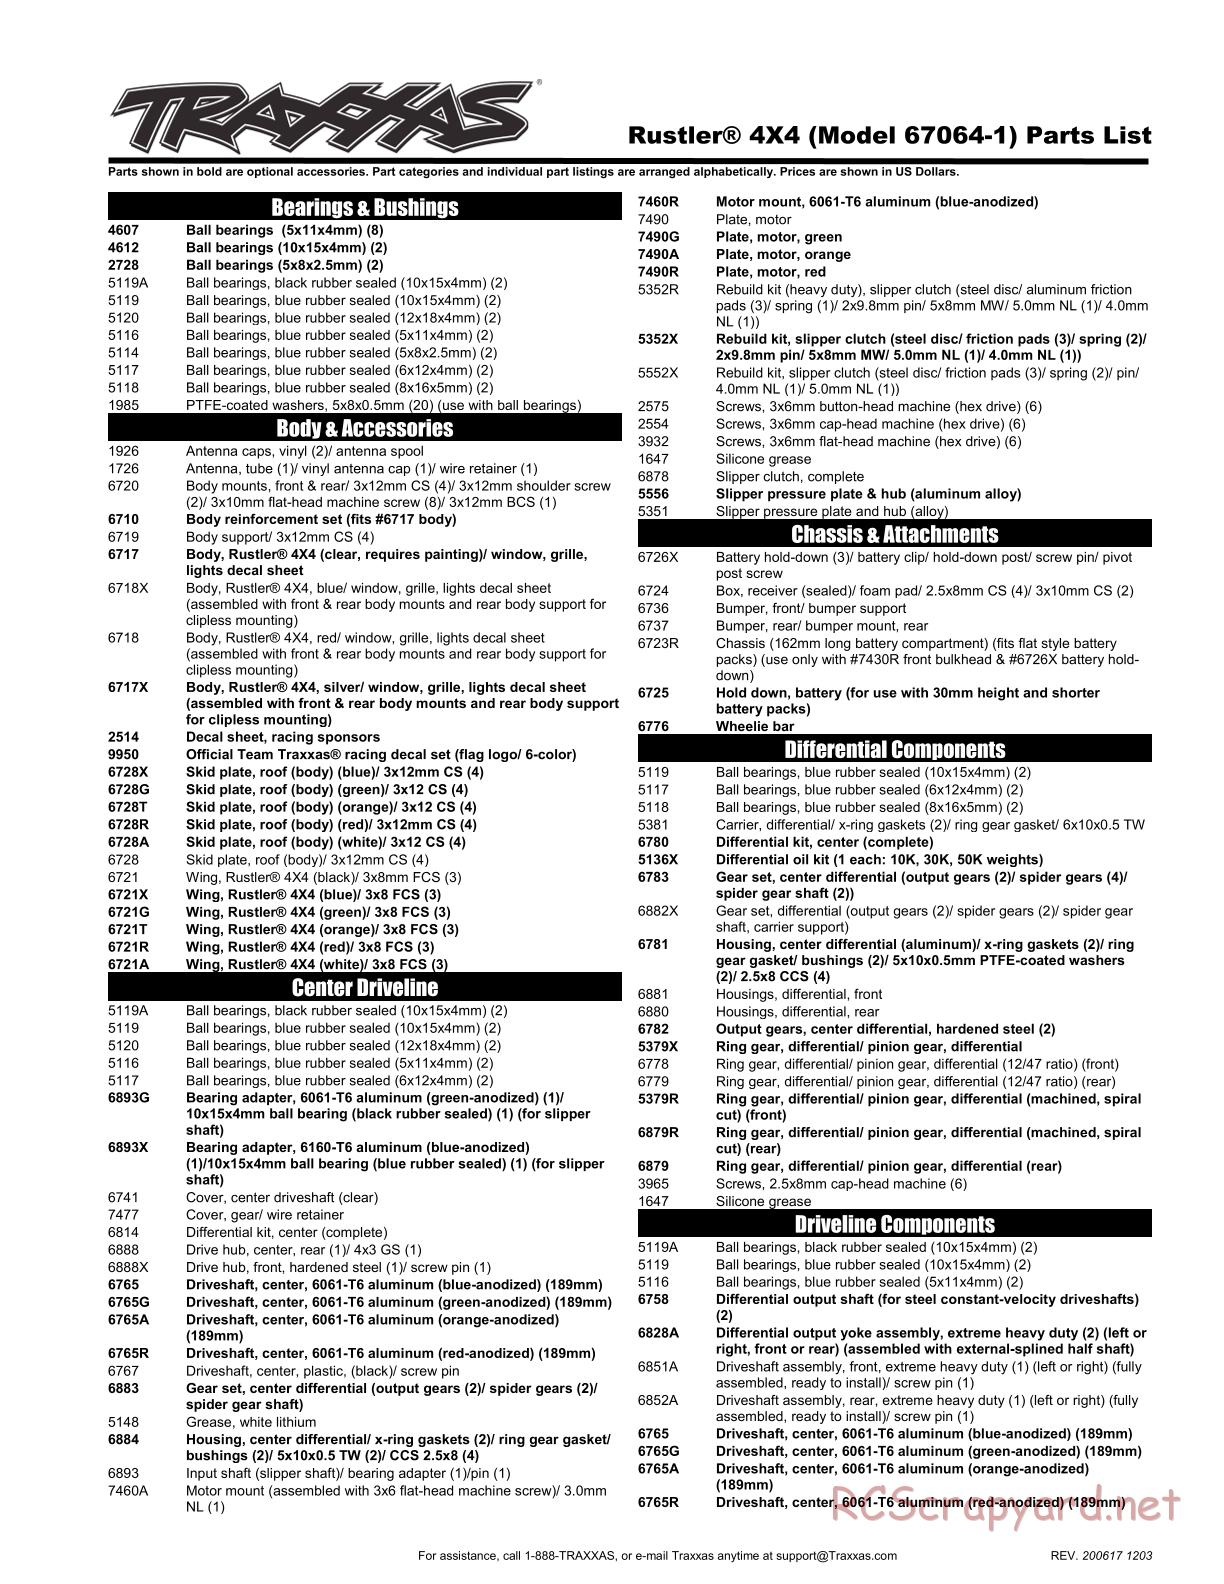 Traxxas - Rustler 4x4 XL-5 - Parts List - Page 1